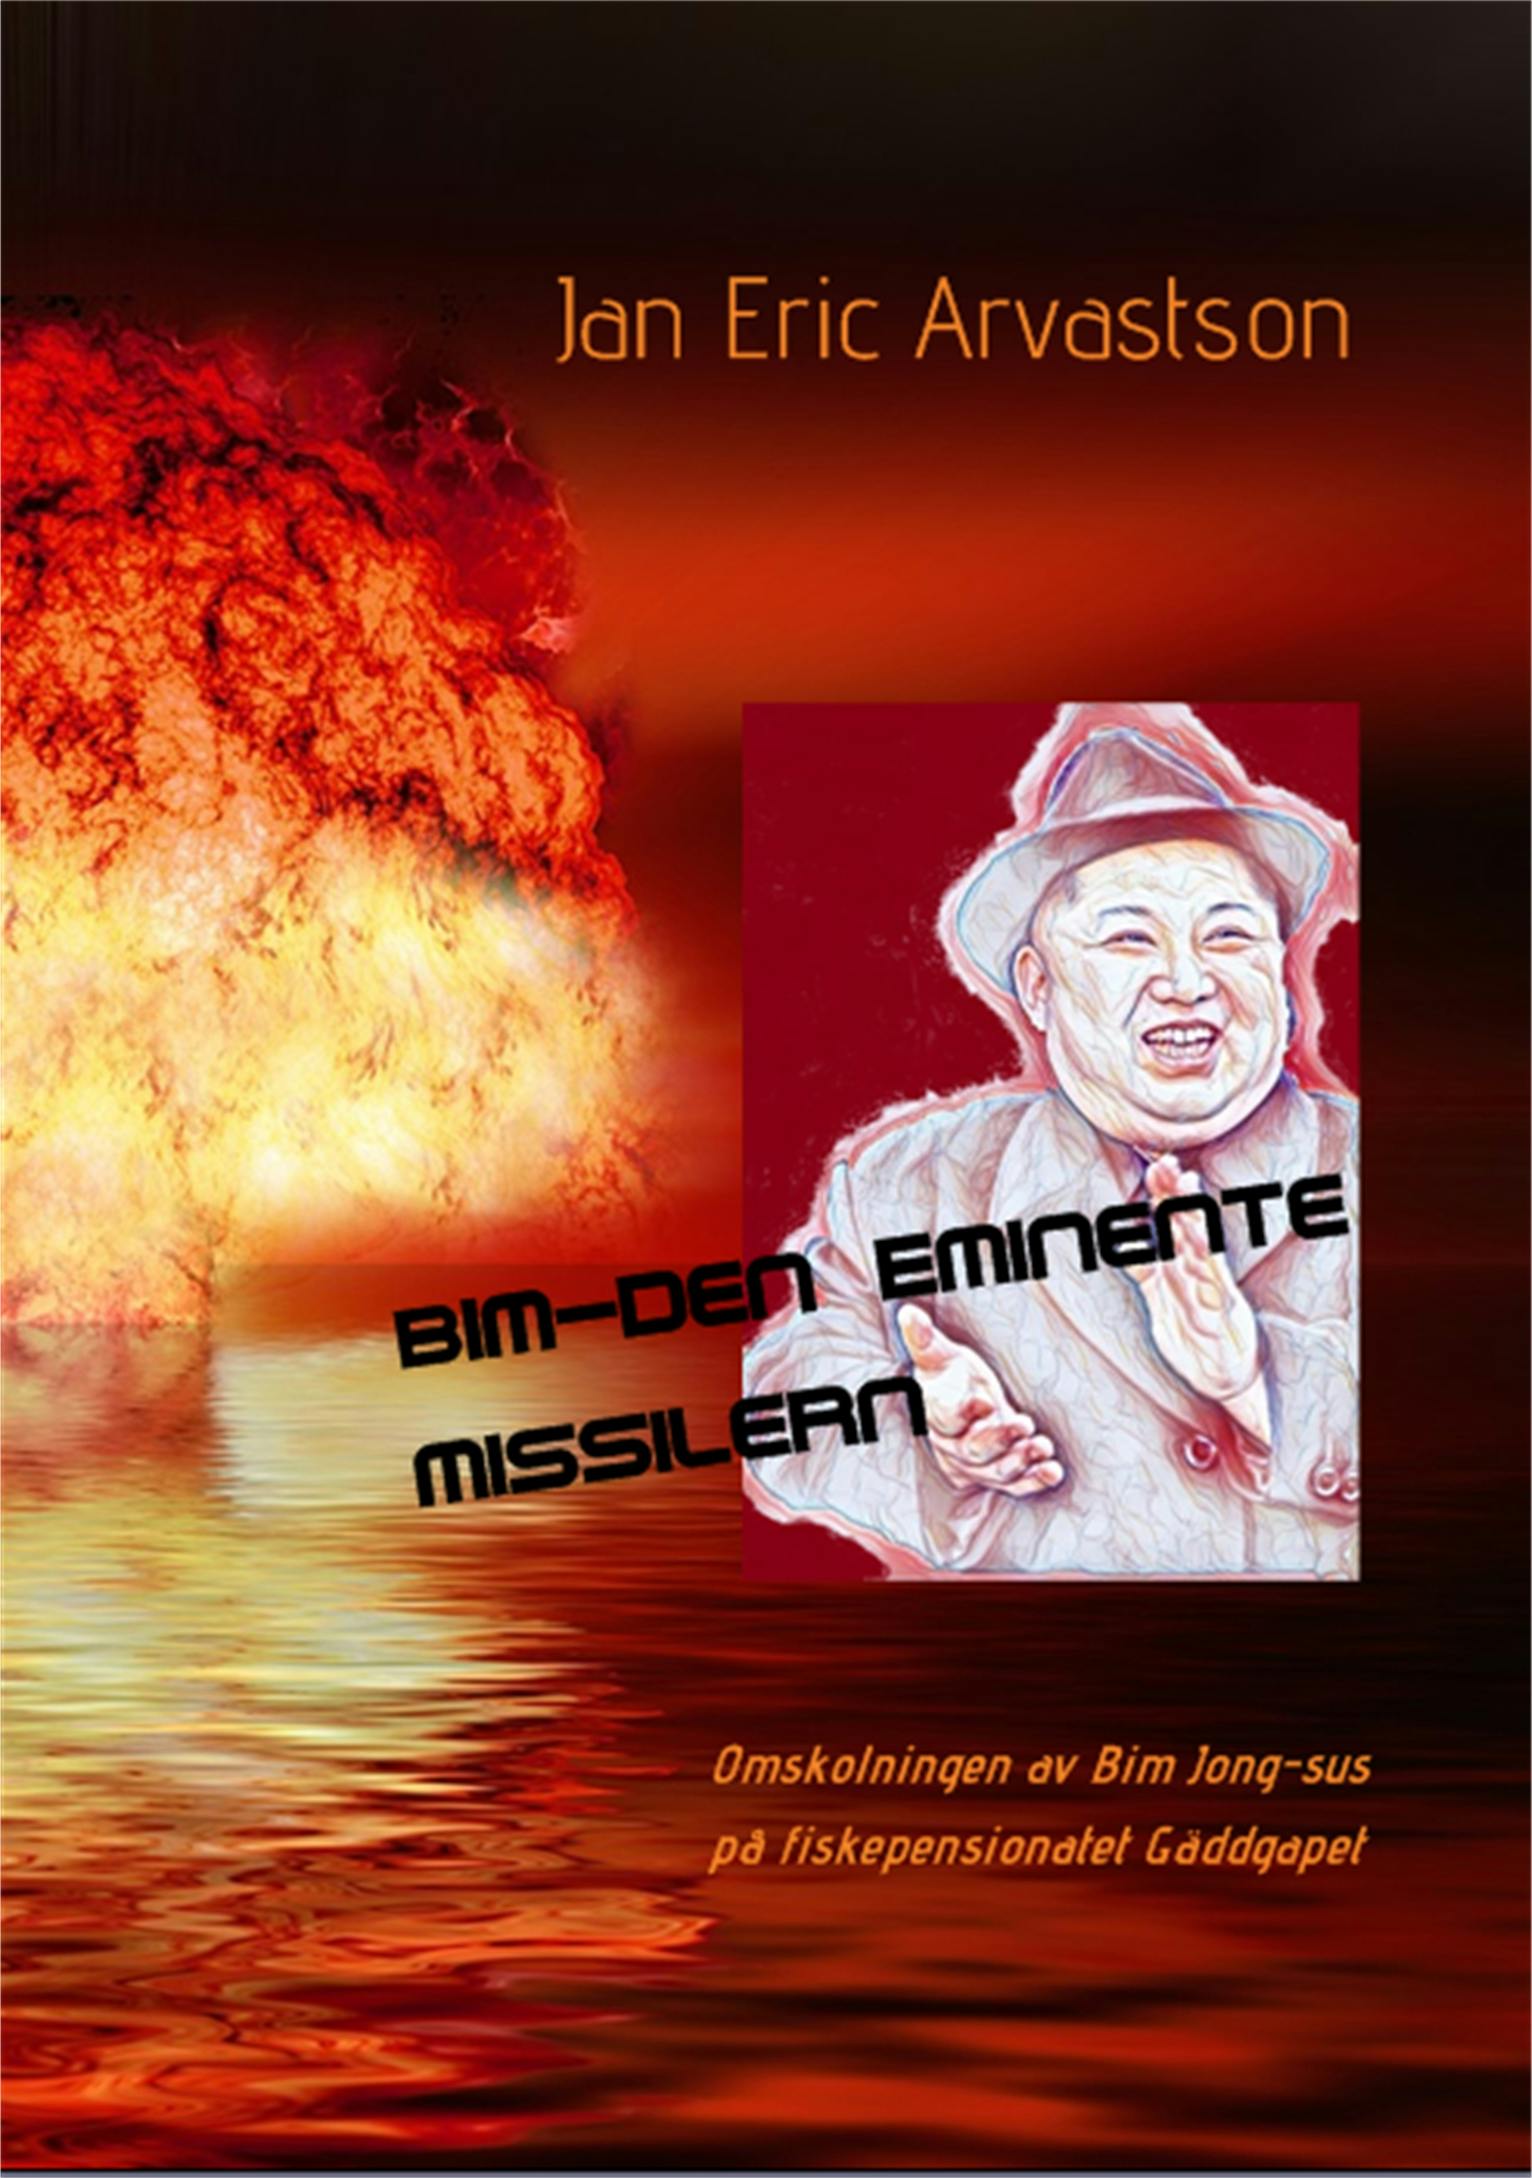 Bim-Den Eminente Missilern - Jan Eric Arvastson